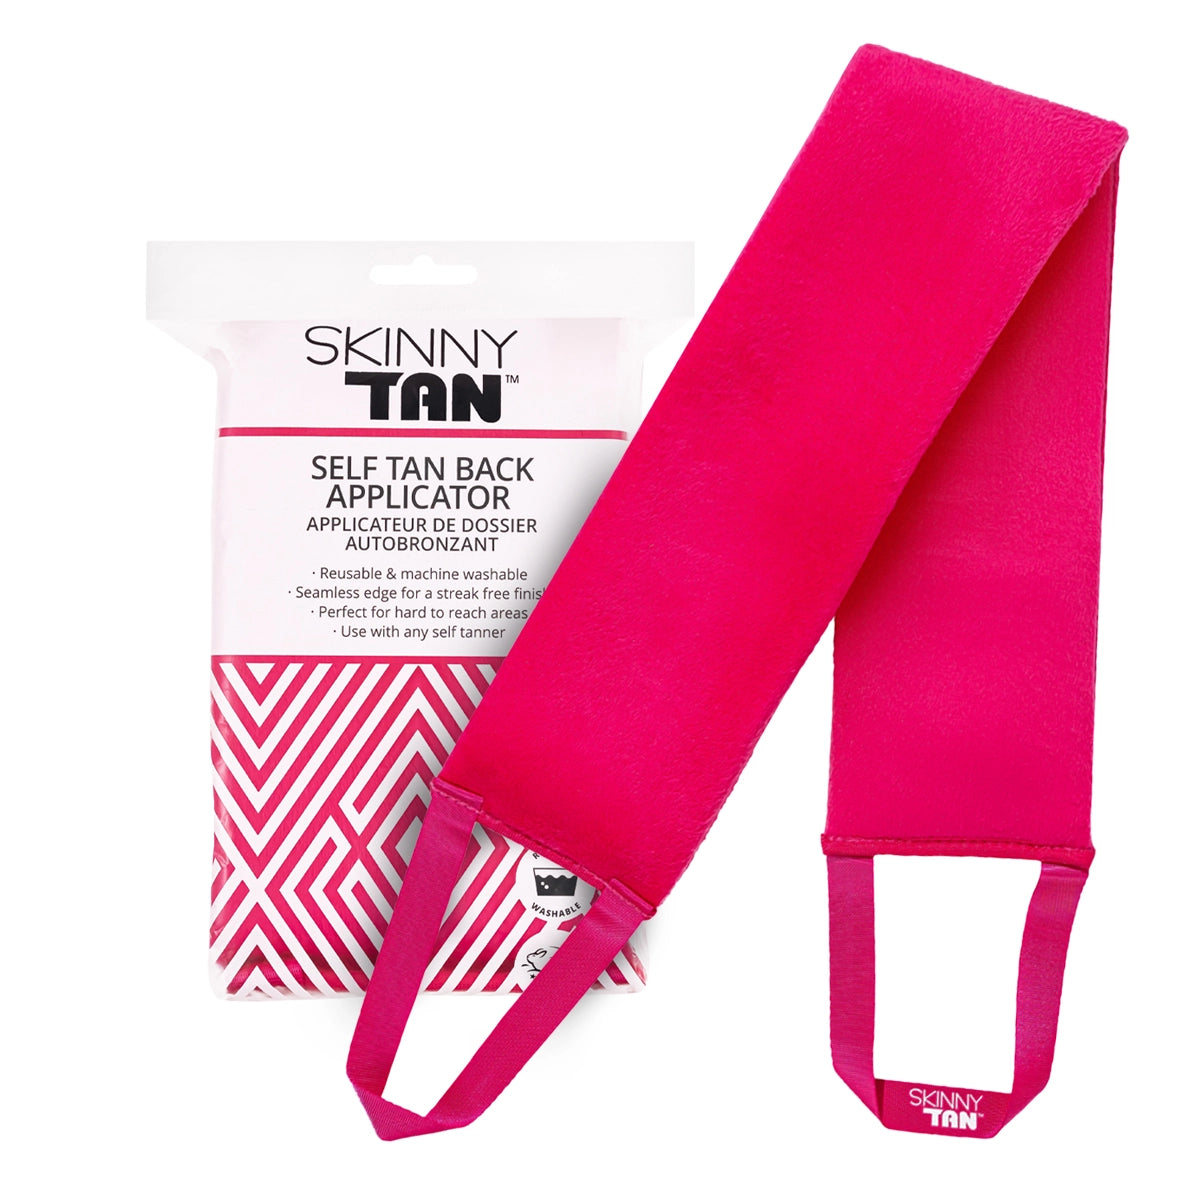 Skinny Tan Self-Tan Back Applicator Perfect For Those Hard To Reach Areas